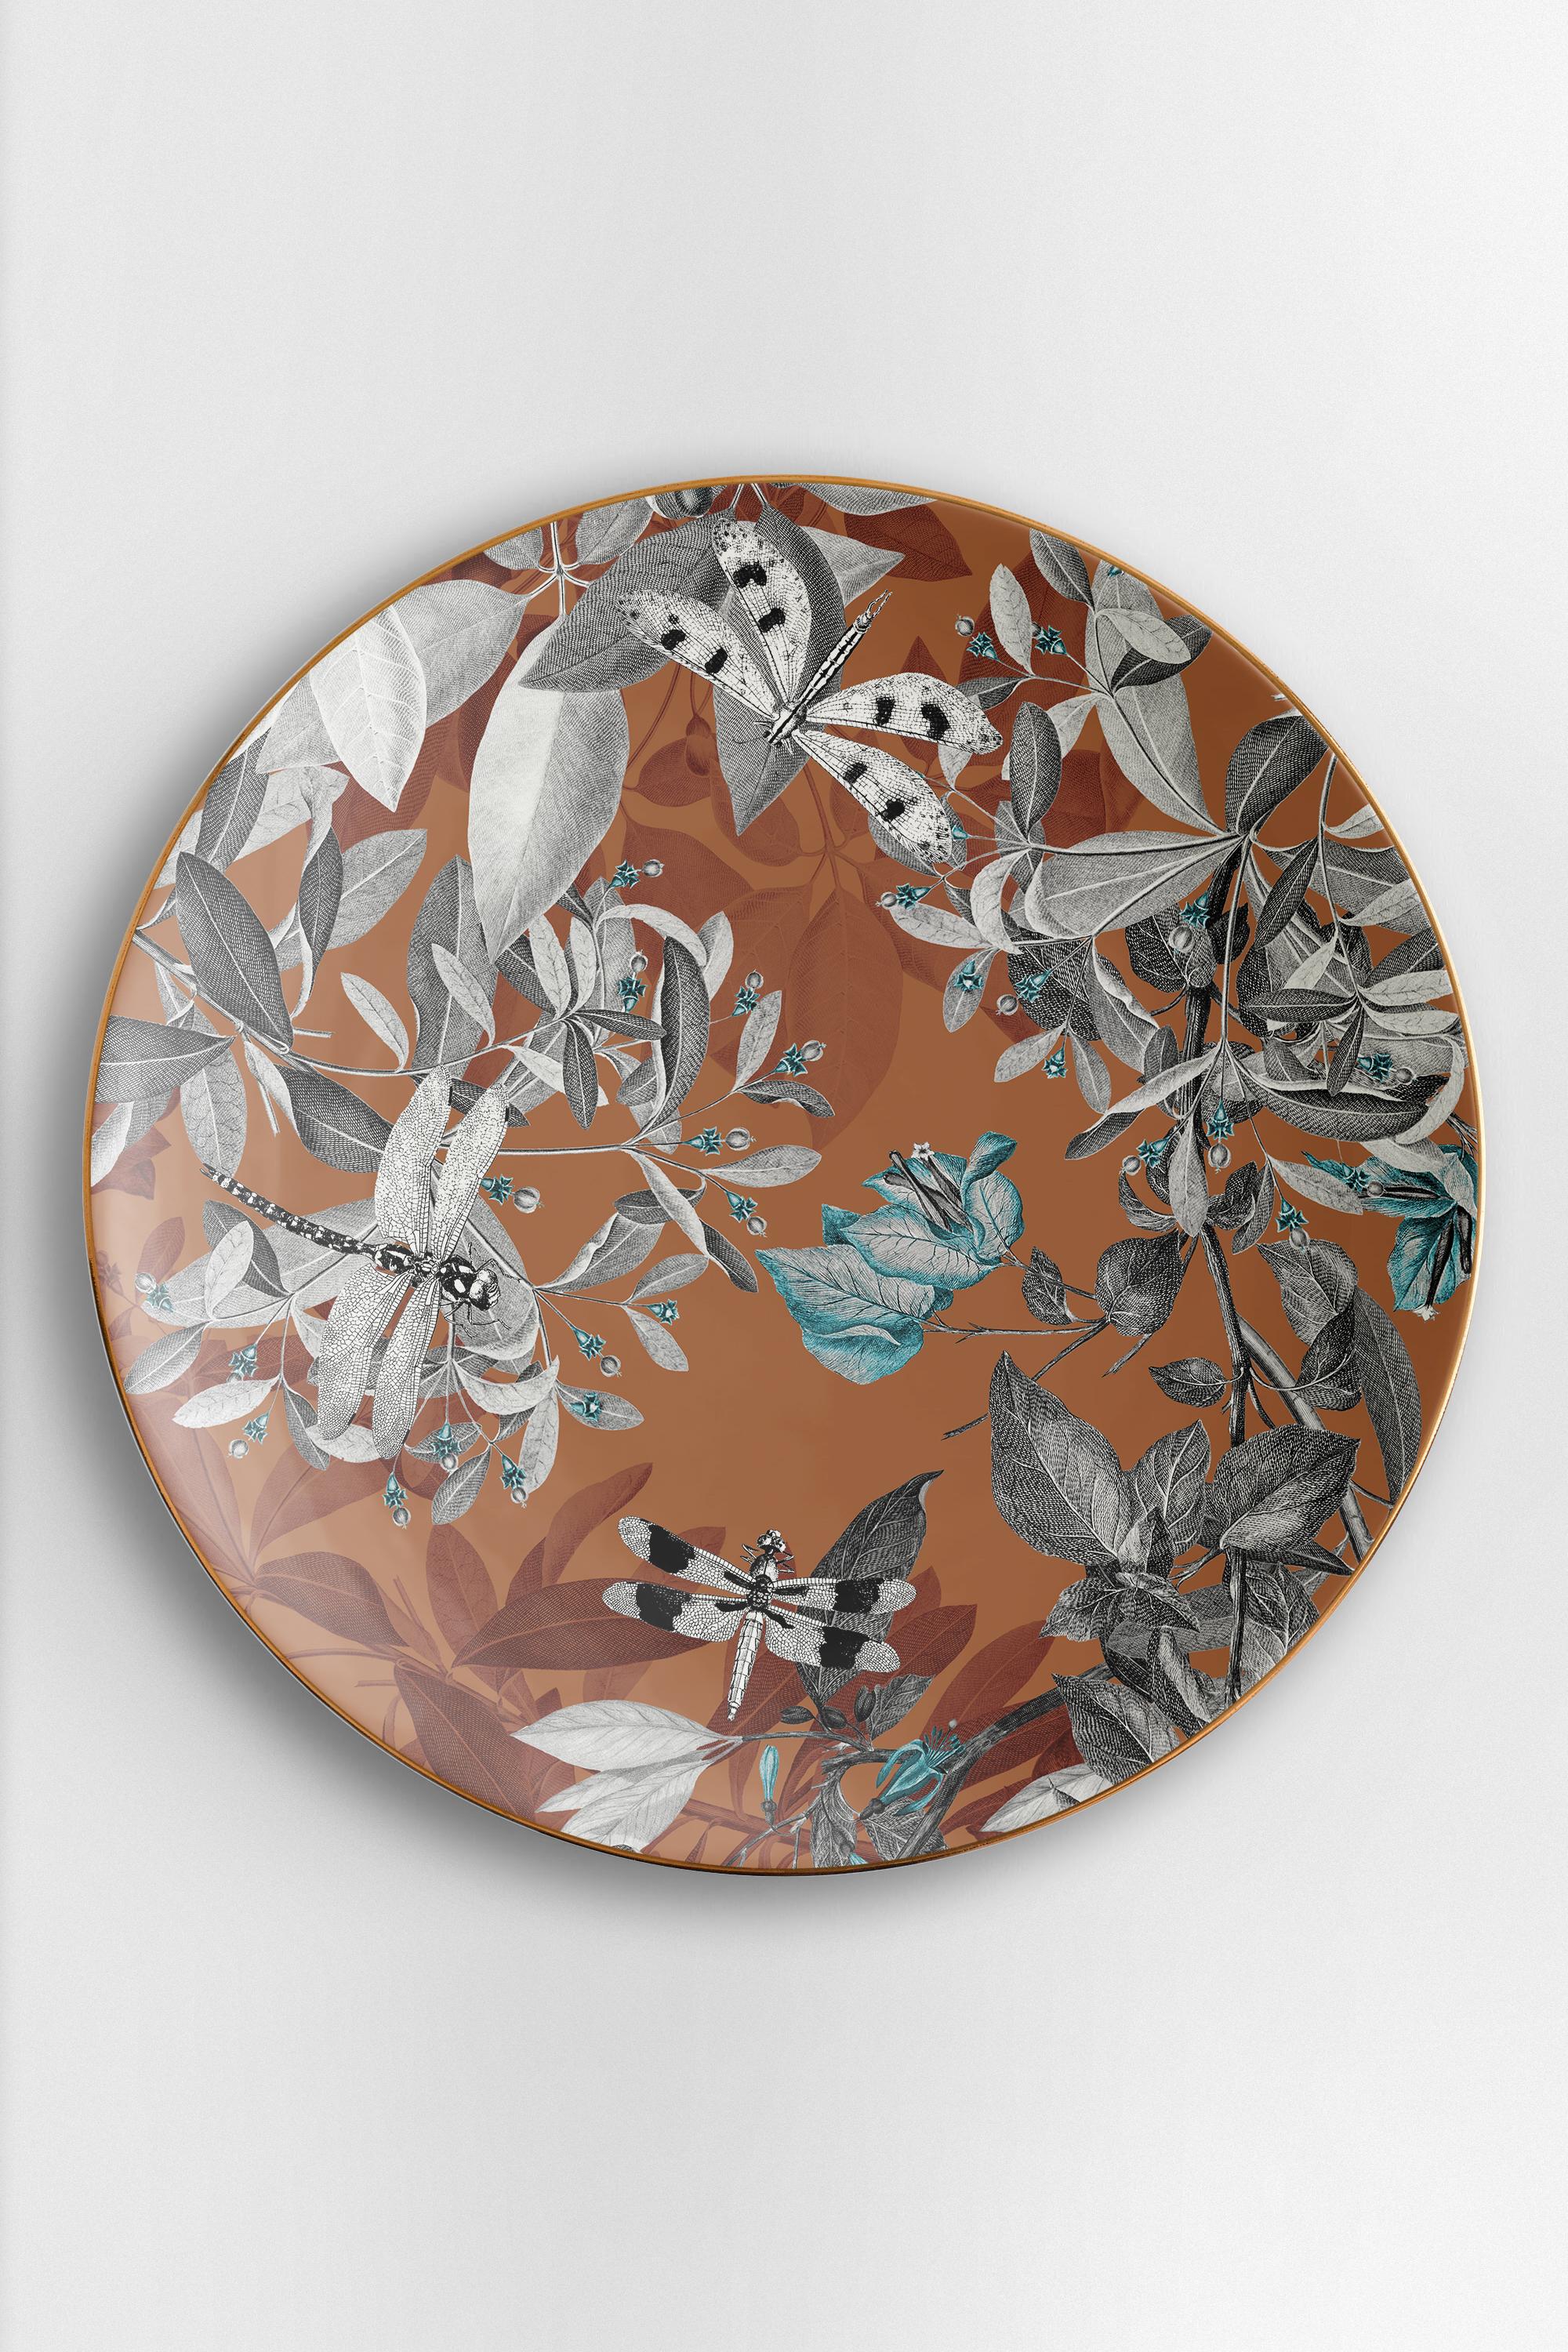 Black Dragon, Six Contemporary Porcelain Dinner Plates with Decorative Design For Sale 3